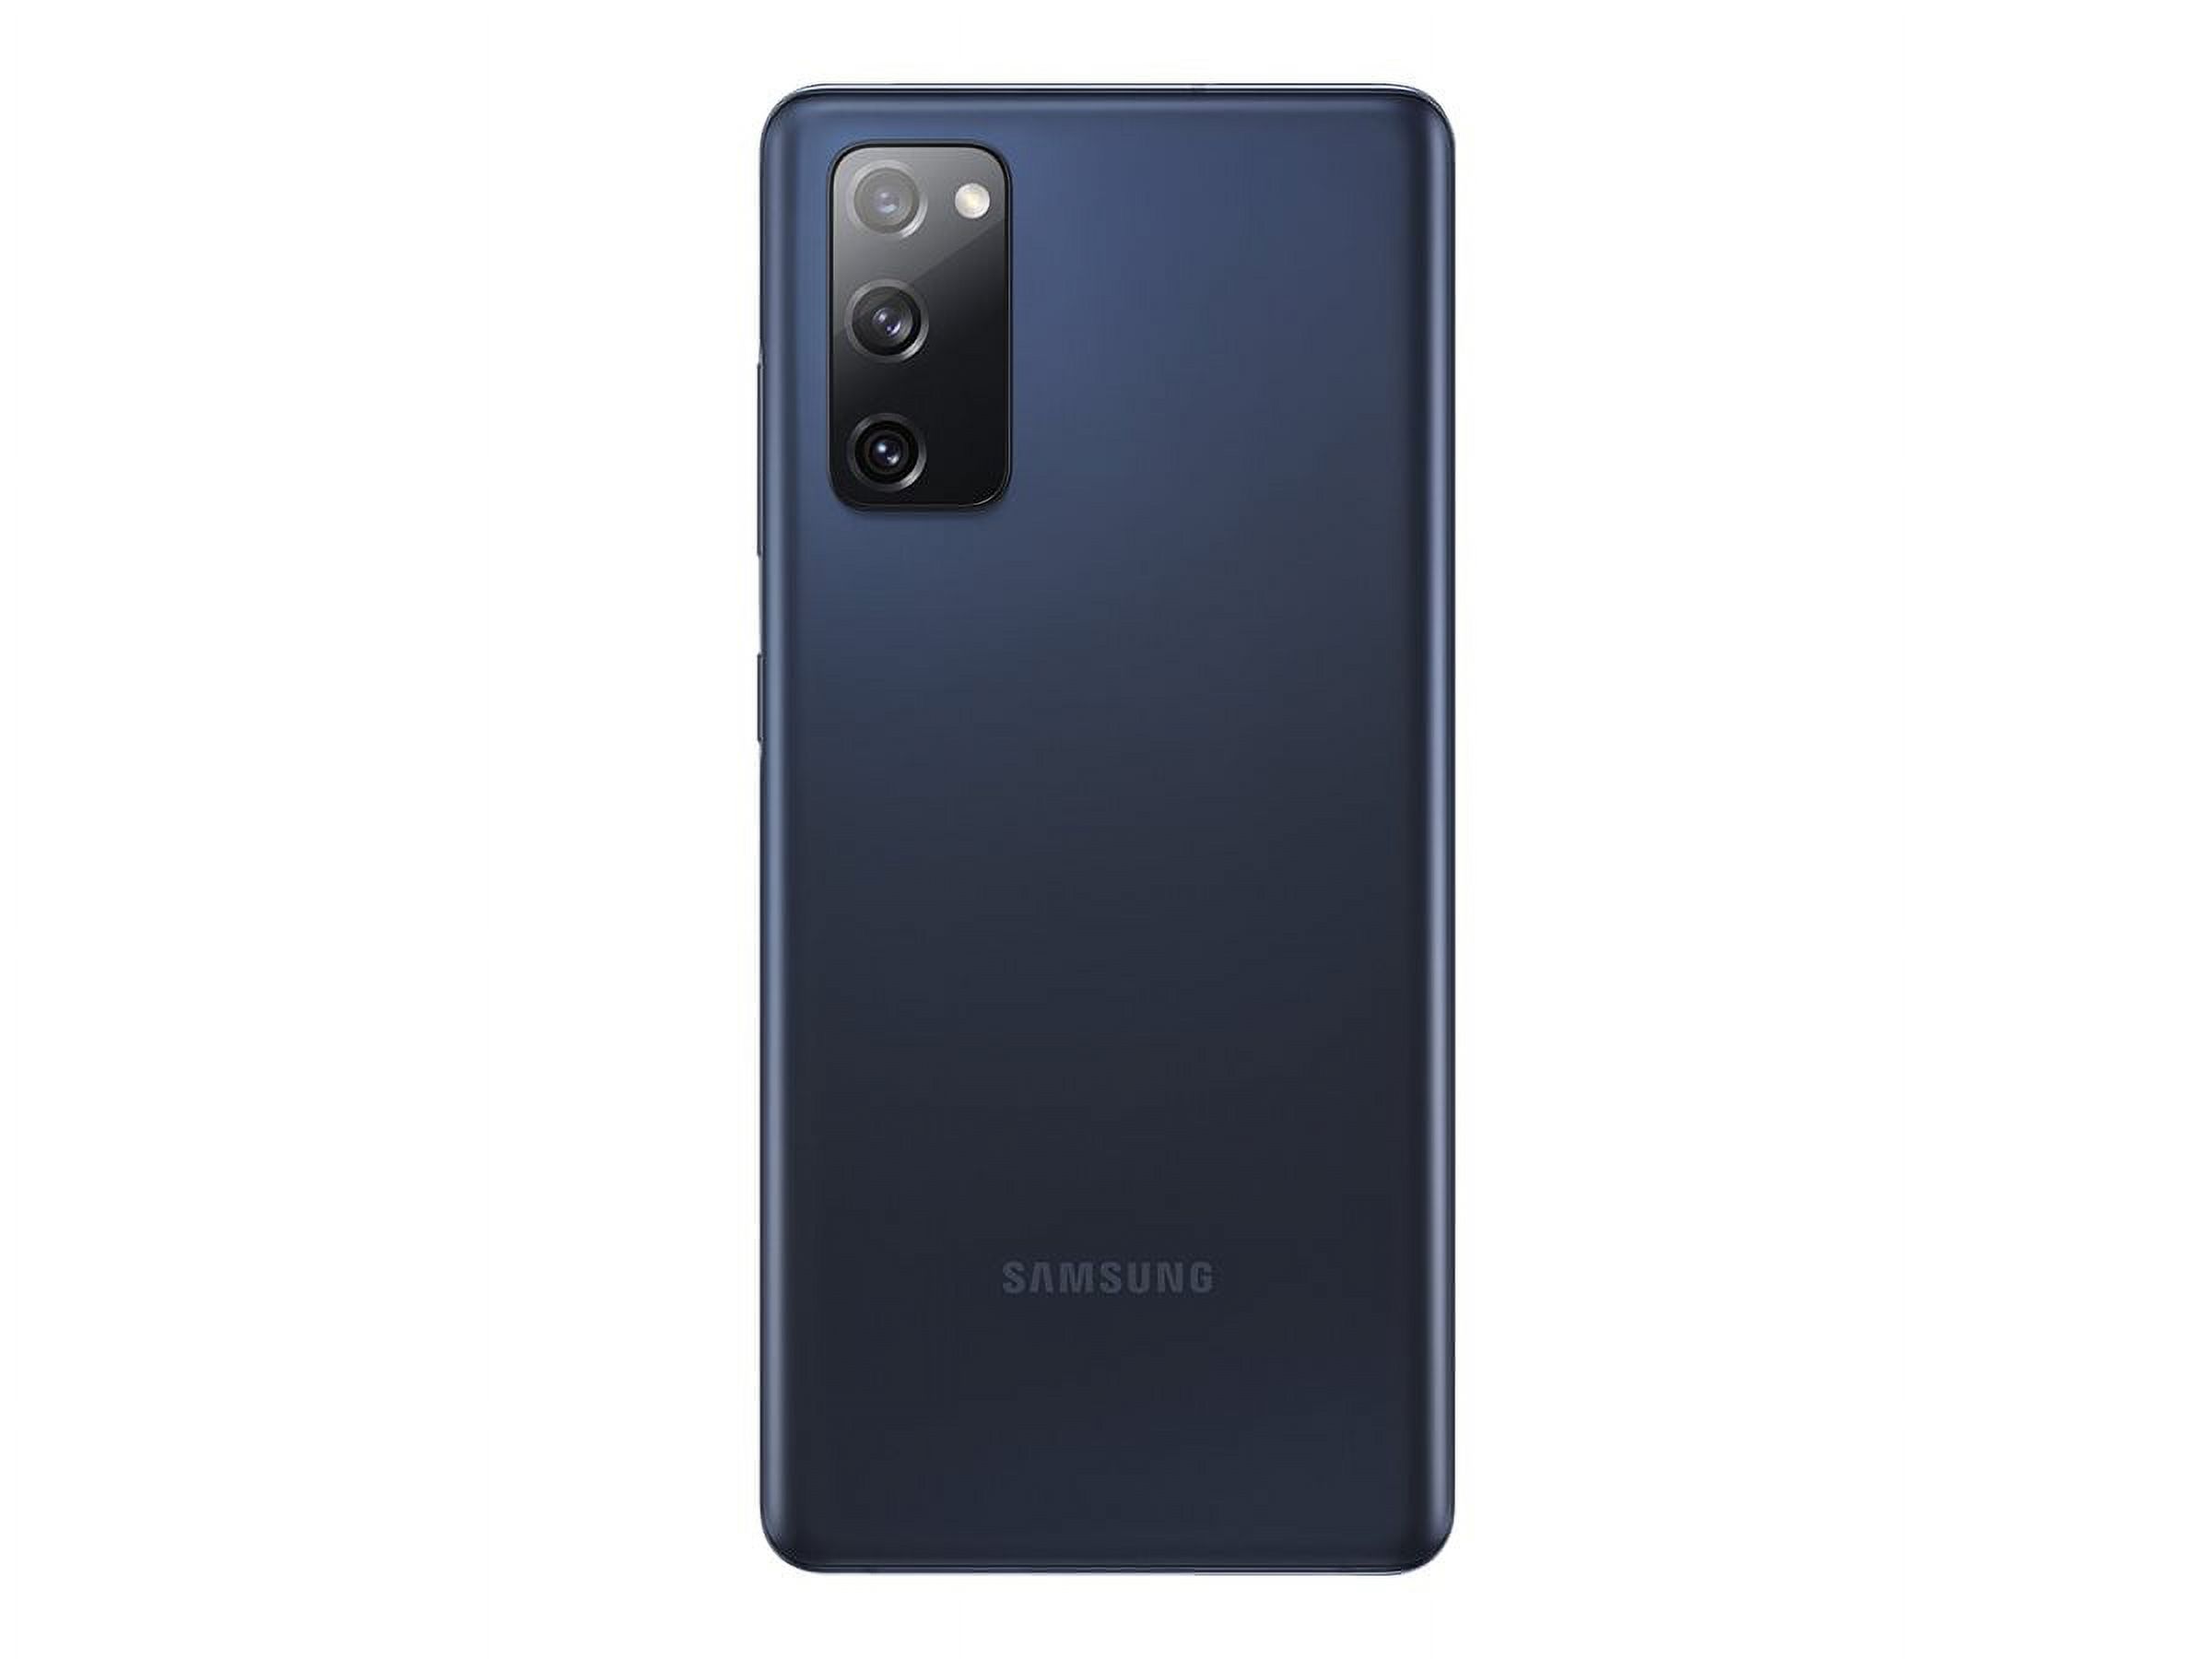 Samsung Galaxy S20 FE 5G - 5G smartphone - RAM 6 GB / Internal Memory 128 GB - microSD slot - OLED display - 6.5" - 2400 x 1080 pixels (120 Hz) - 3x rear cameras 12 MP, 12 MP, 8 MP - front camera 32 MP - AT&T - cloud navy - image 3 of 7